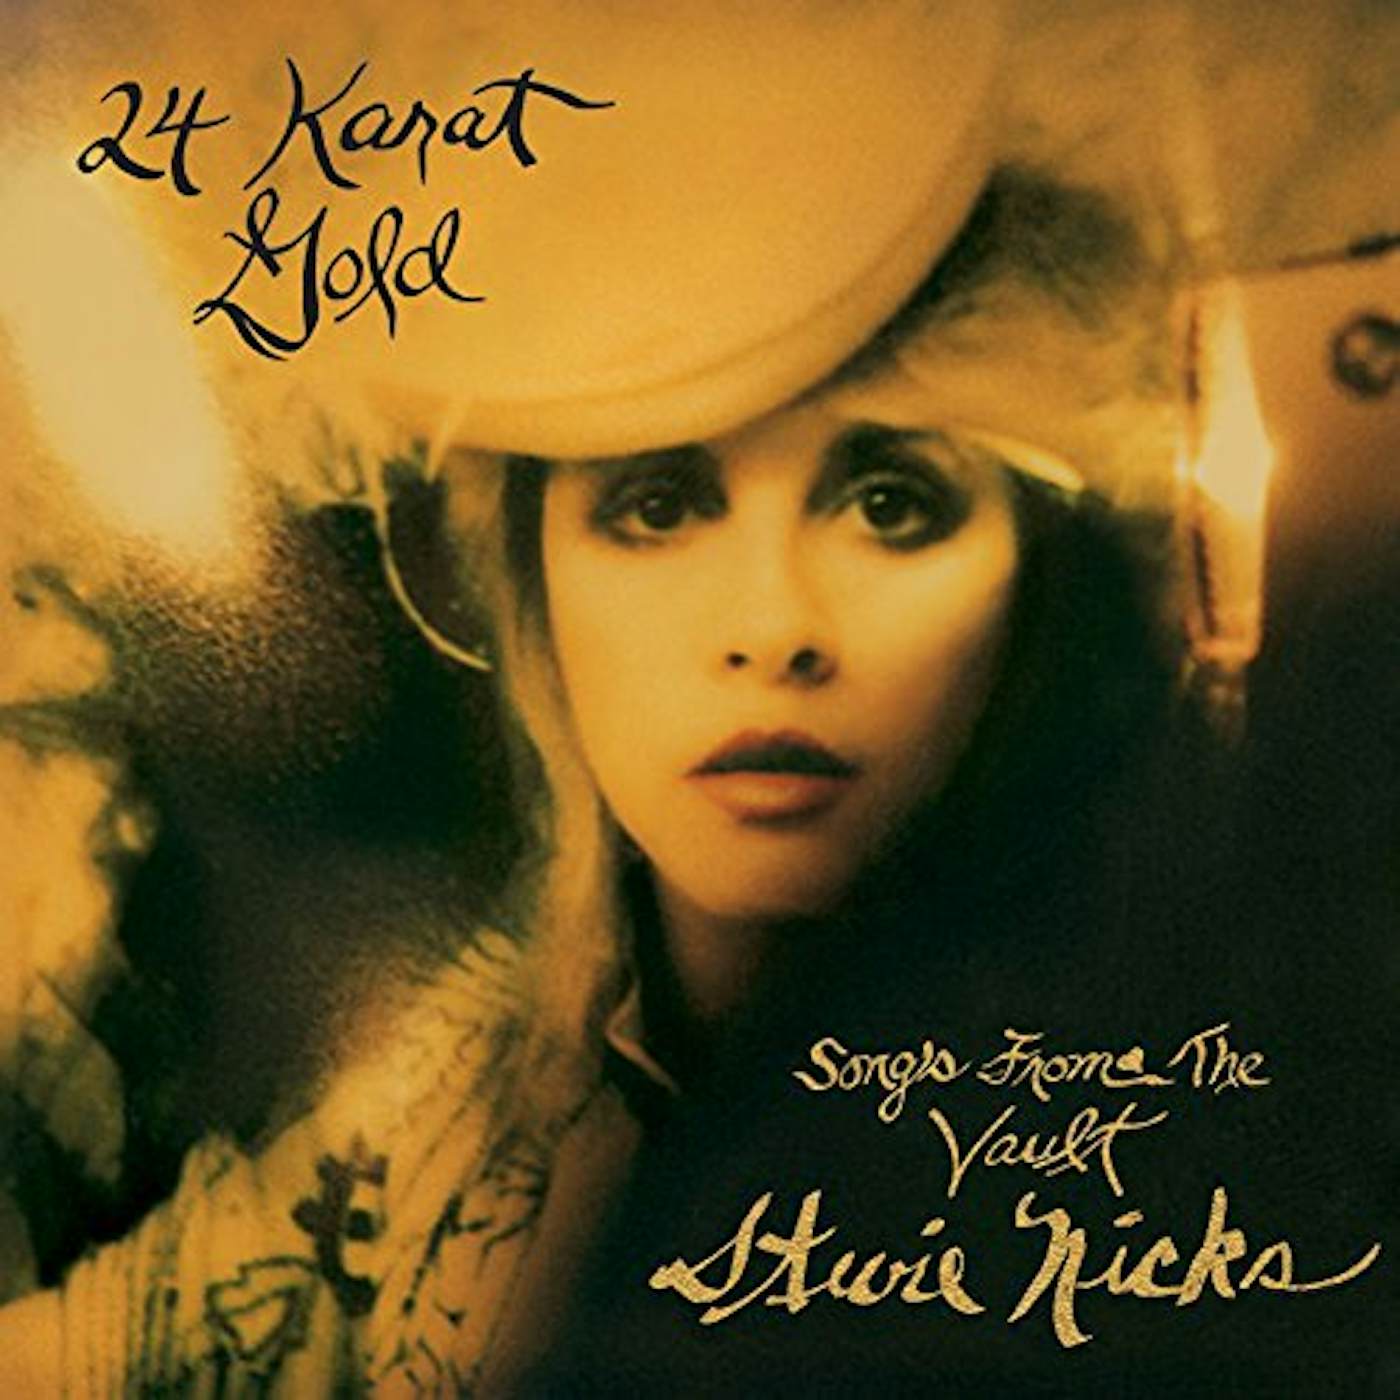 Stevie Nicks 24 Karat Gold - Songs From The Vault Vinyl Record